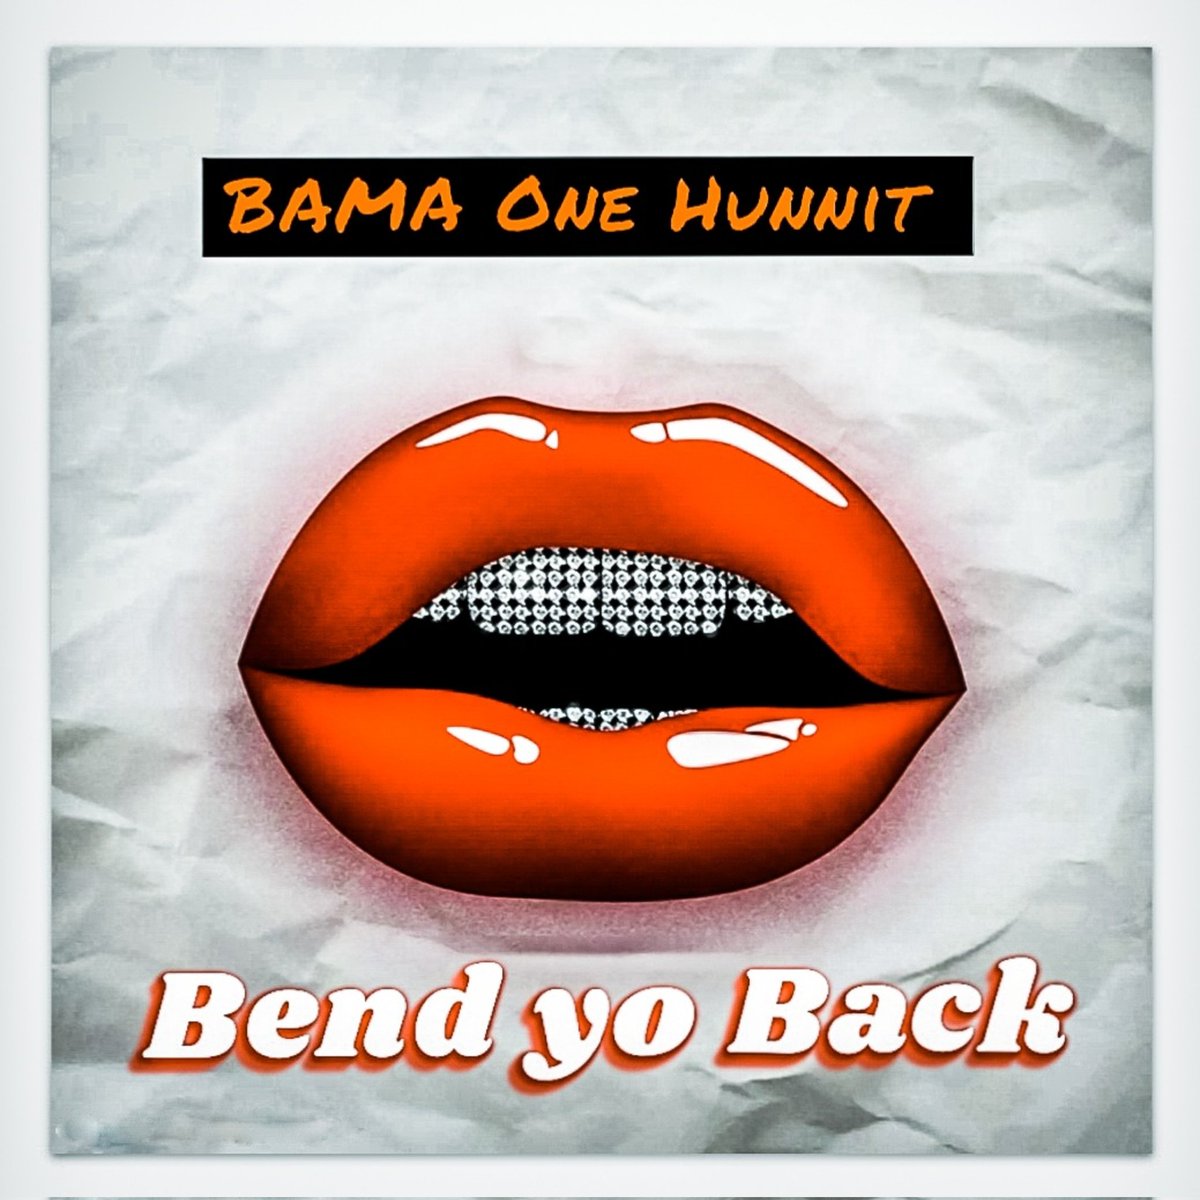 Check out my new single BEND YO BACK #BAMAONEHUNNIT #rapmusic #hiphopartist #rapartist #clubbanger #djs #banger #ladies #twerk